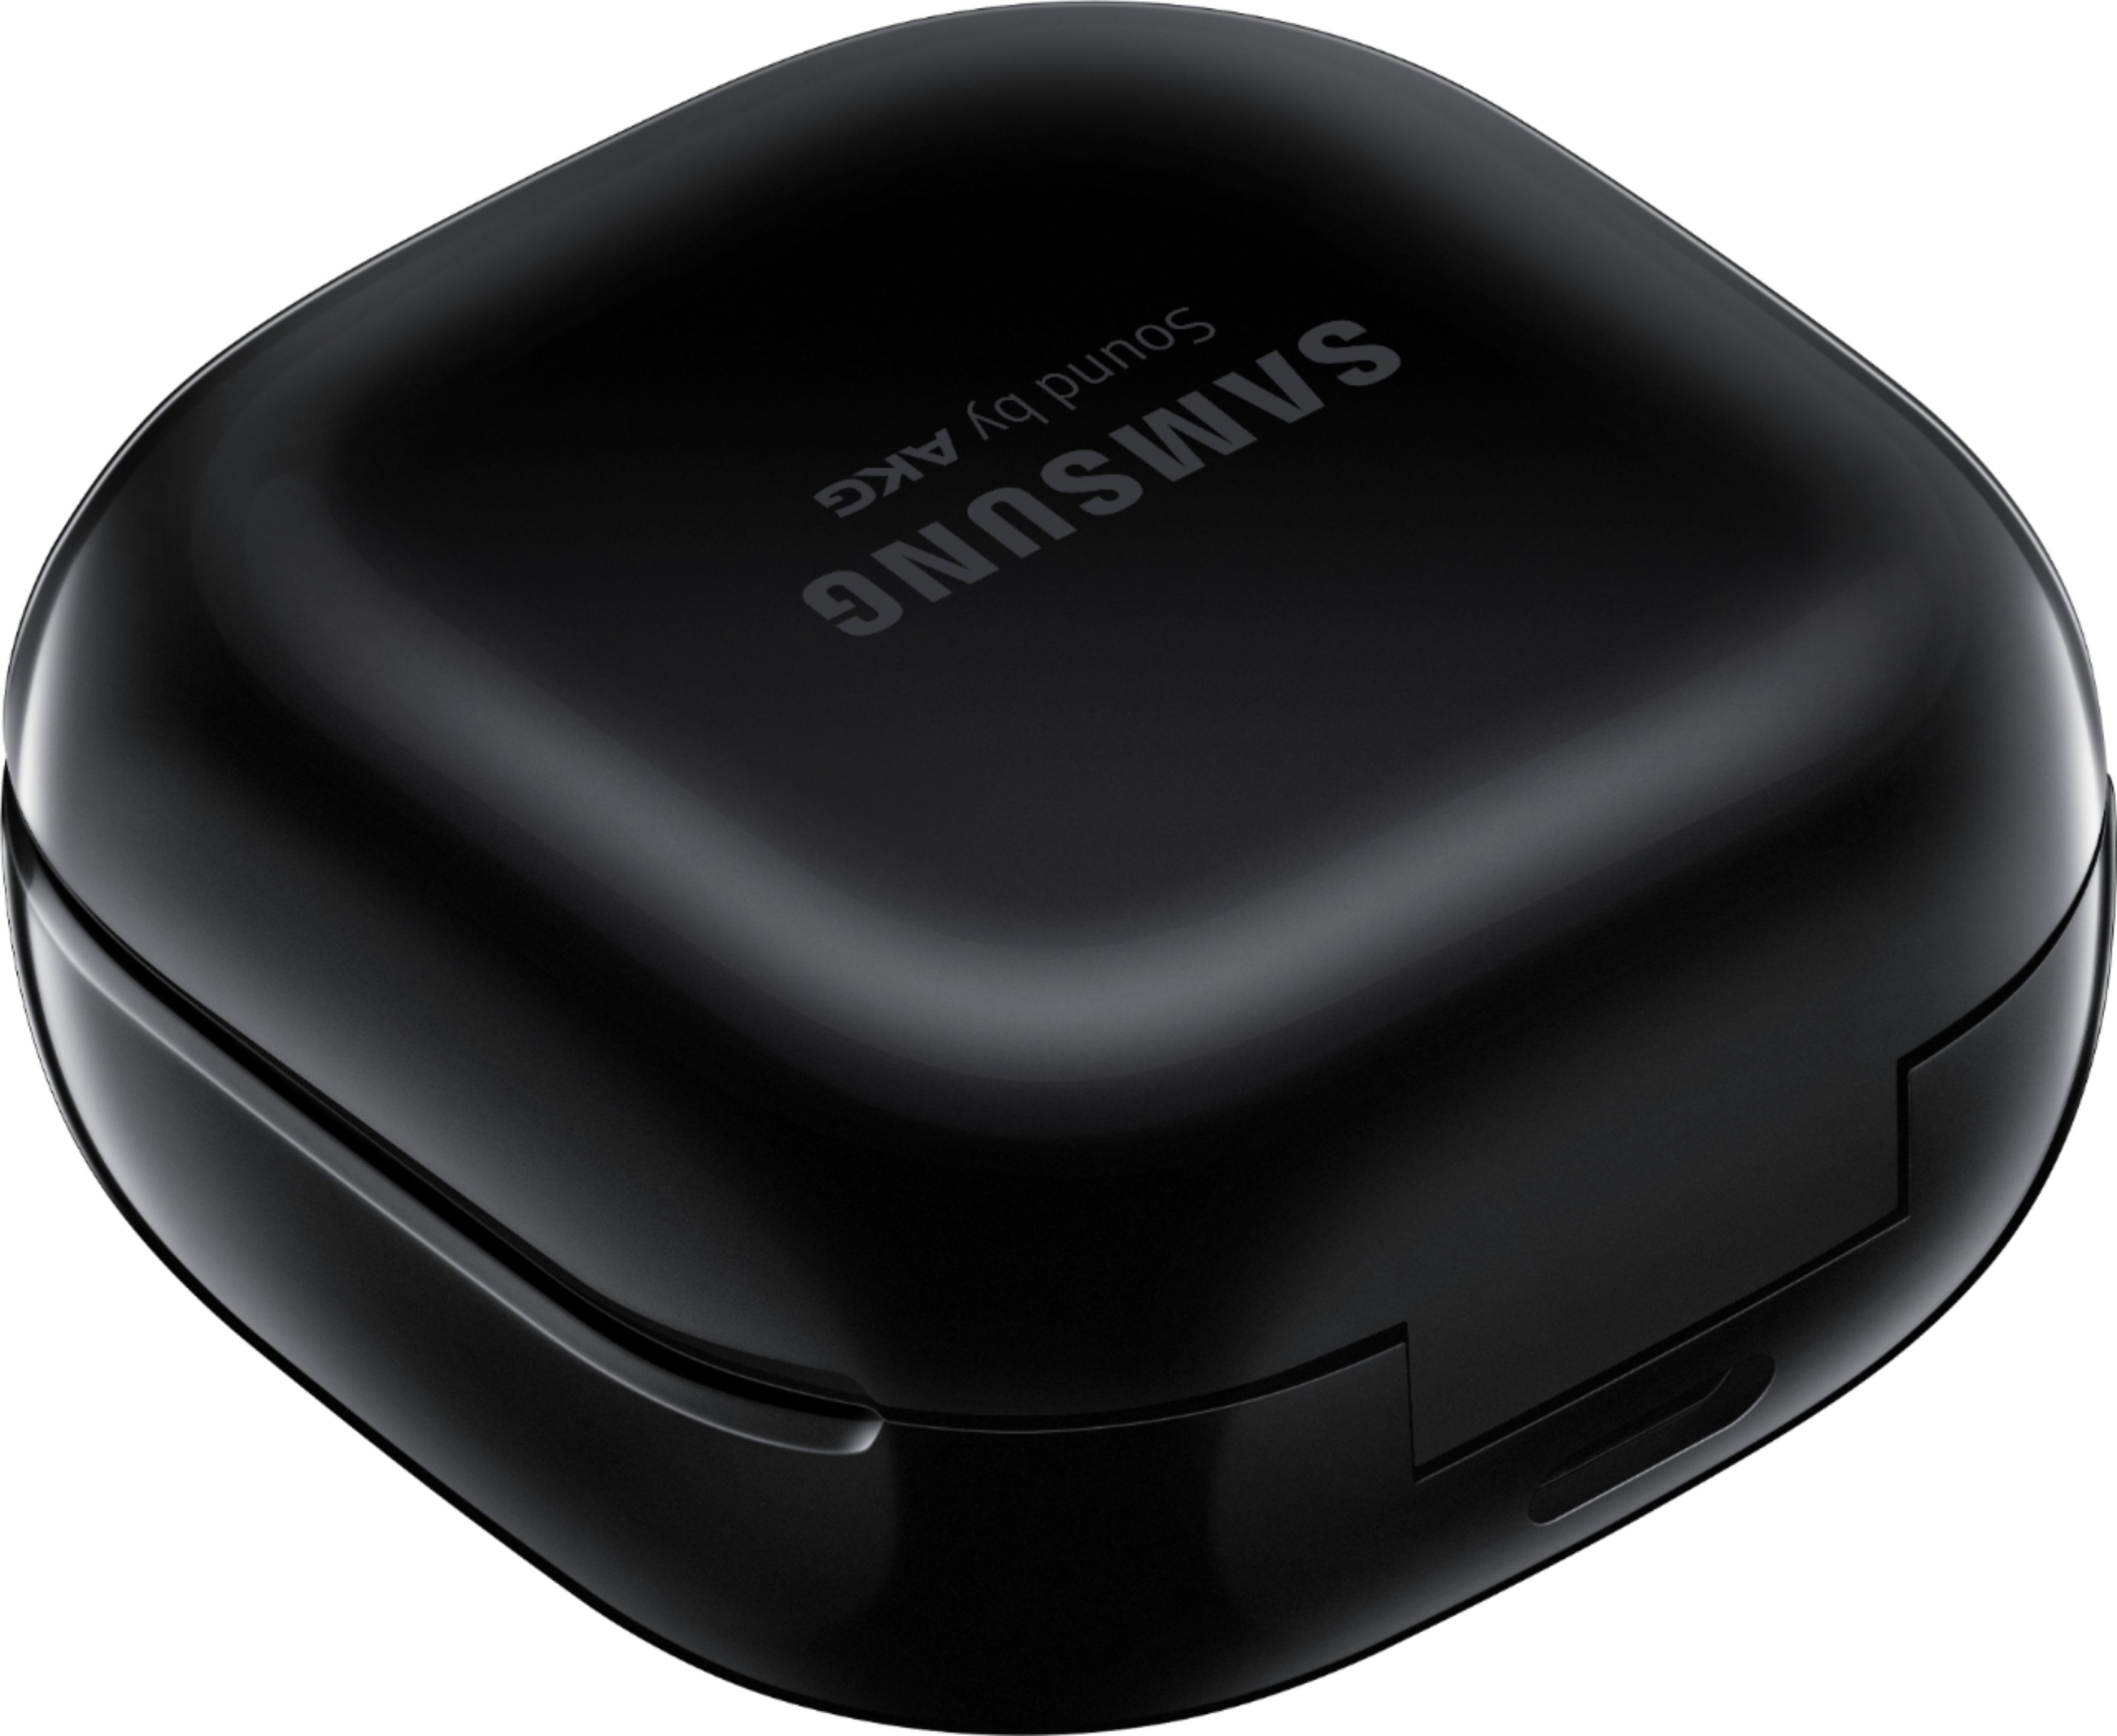 Samsung Galaxy Buds Live True Wireless Earbud Headphones Black Sm R180nzkaxar Best Buy